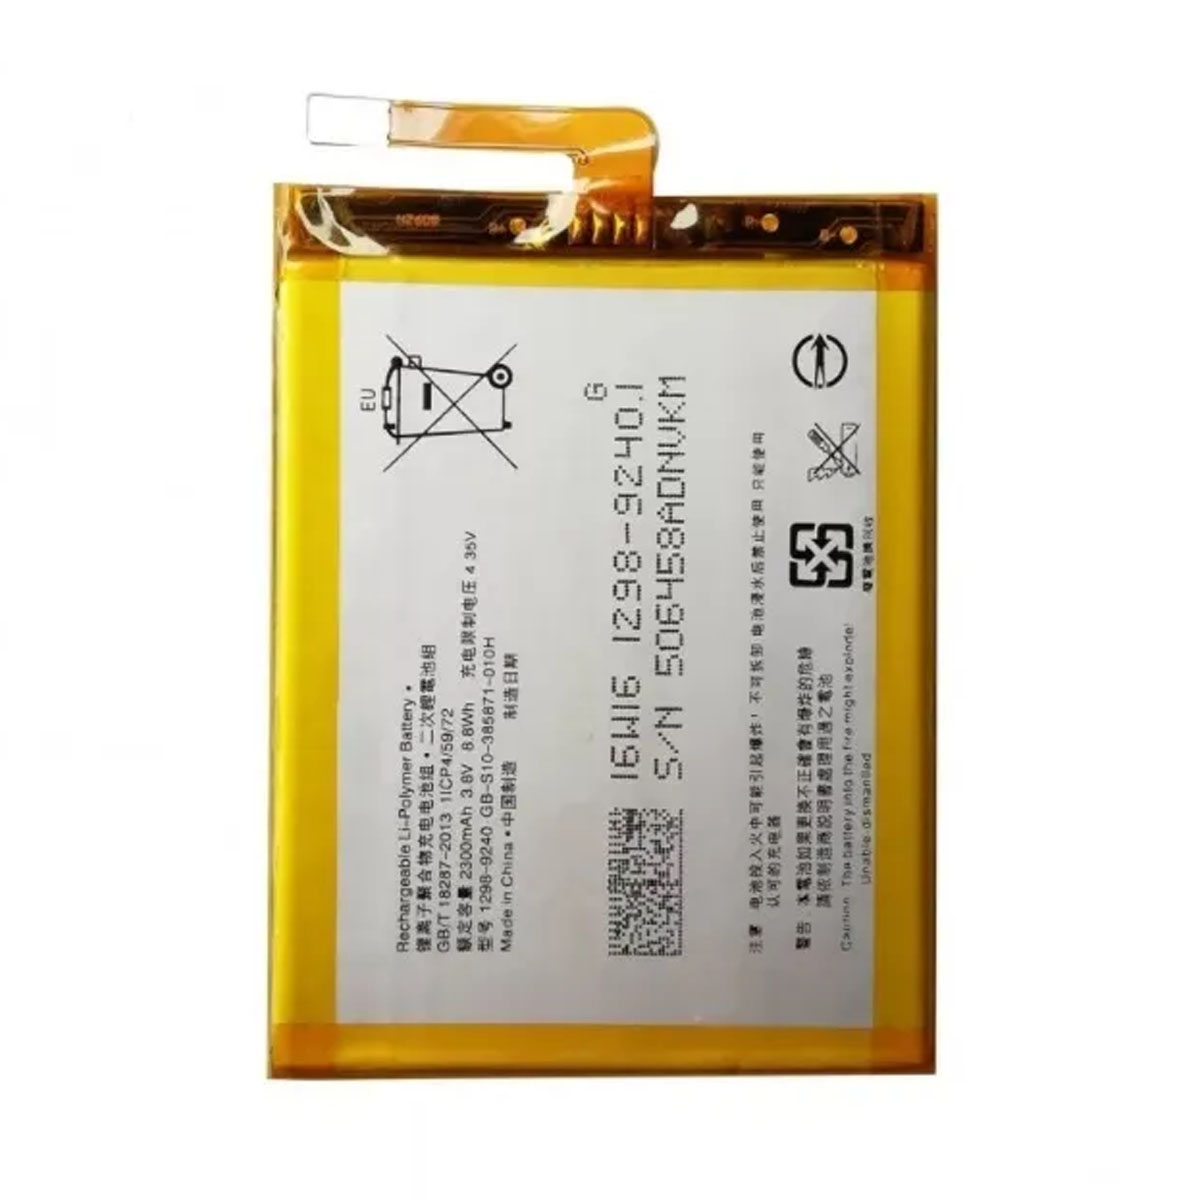 АКБ (Аккумулятор) GB-S10-385871-040H для SONY G3112 XA1 Dual, G3121 XA1